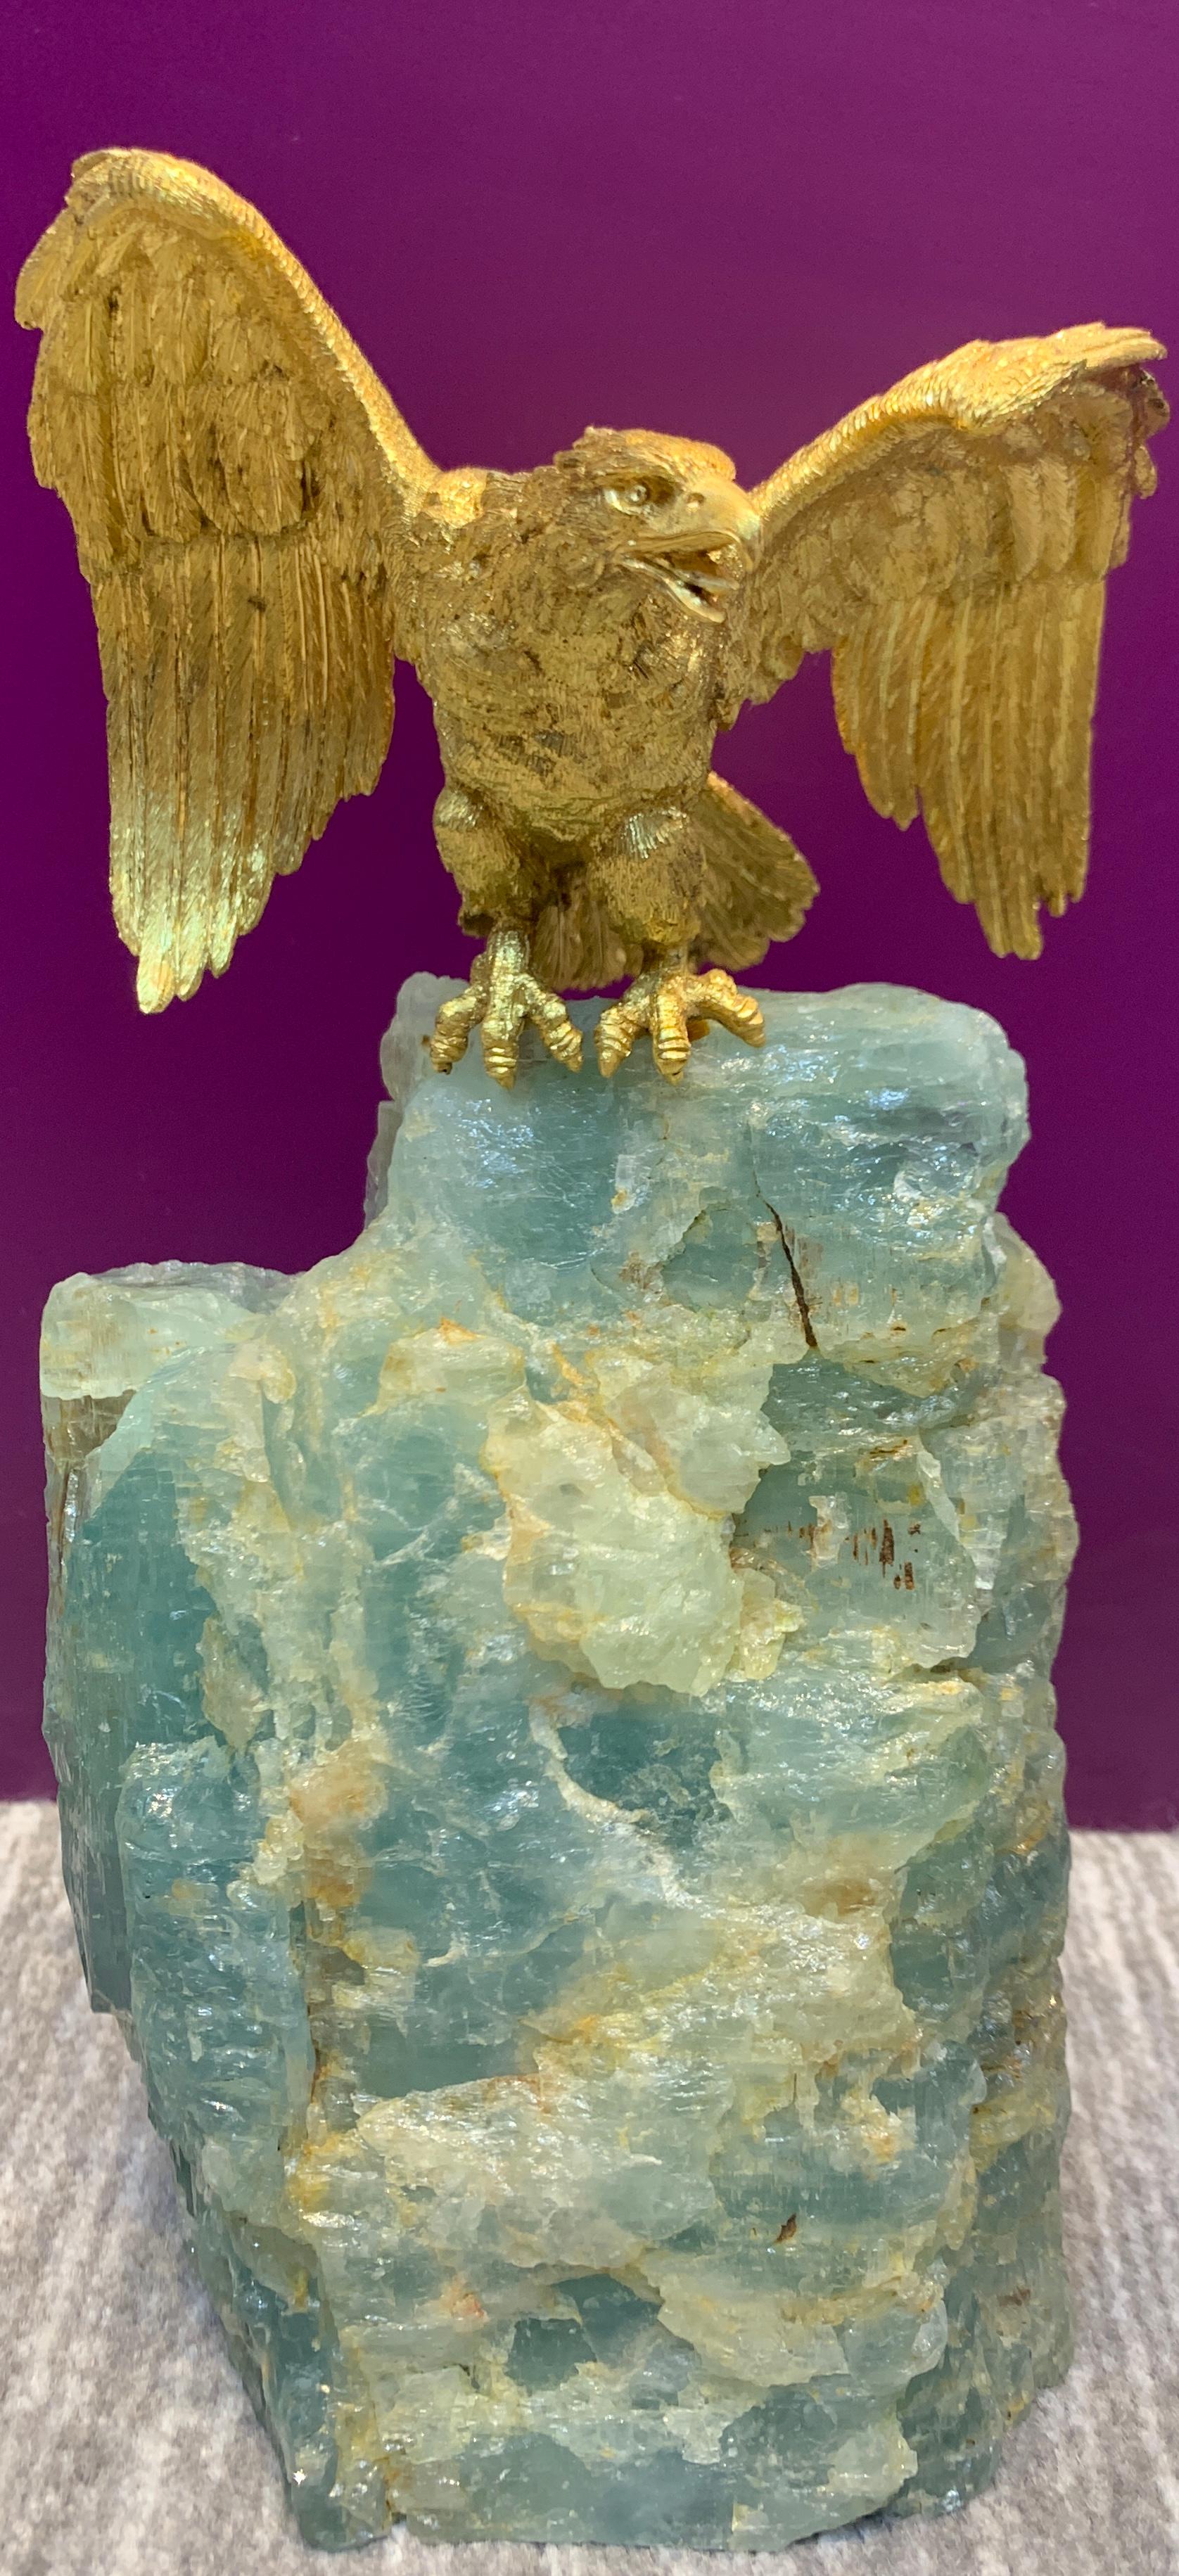 Mario Buccellati Aquamarine & Gold Eagle Sculpture 
18K Yellow Gold eagle posted on a Aquamarine surface
Signed 